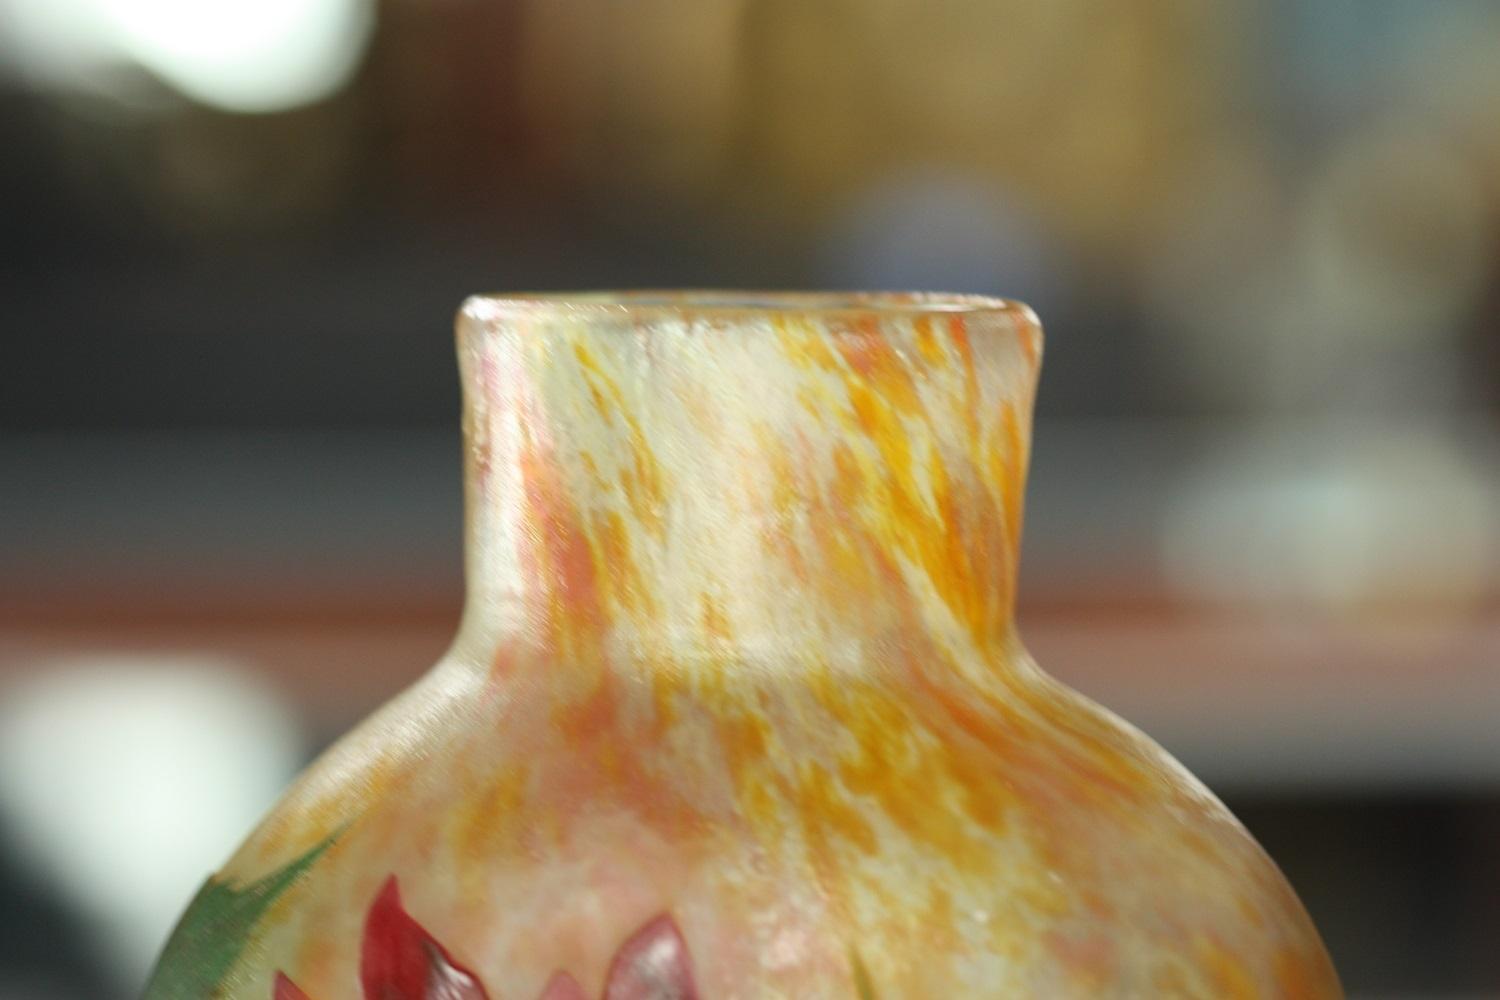 daum nancy cameo glass vase